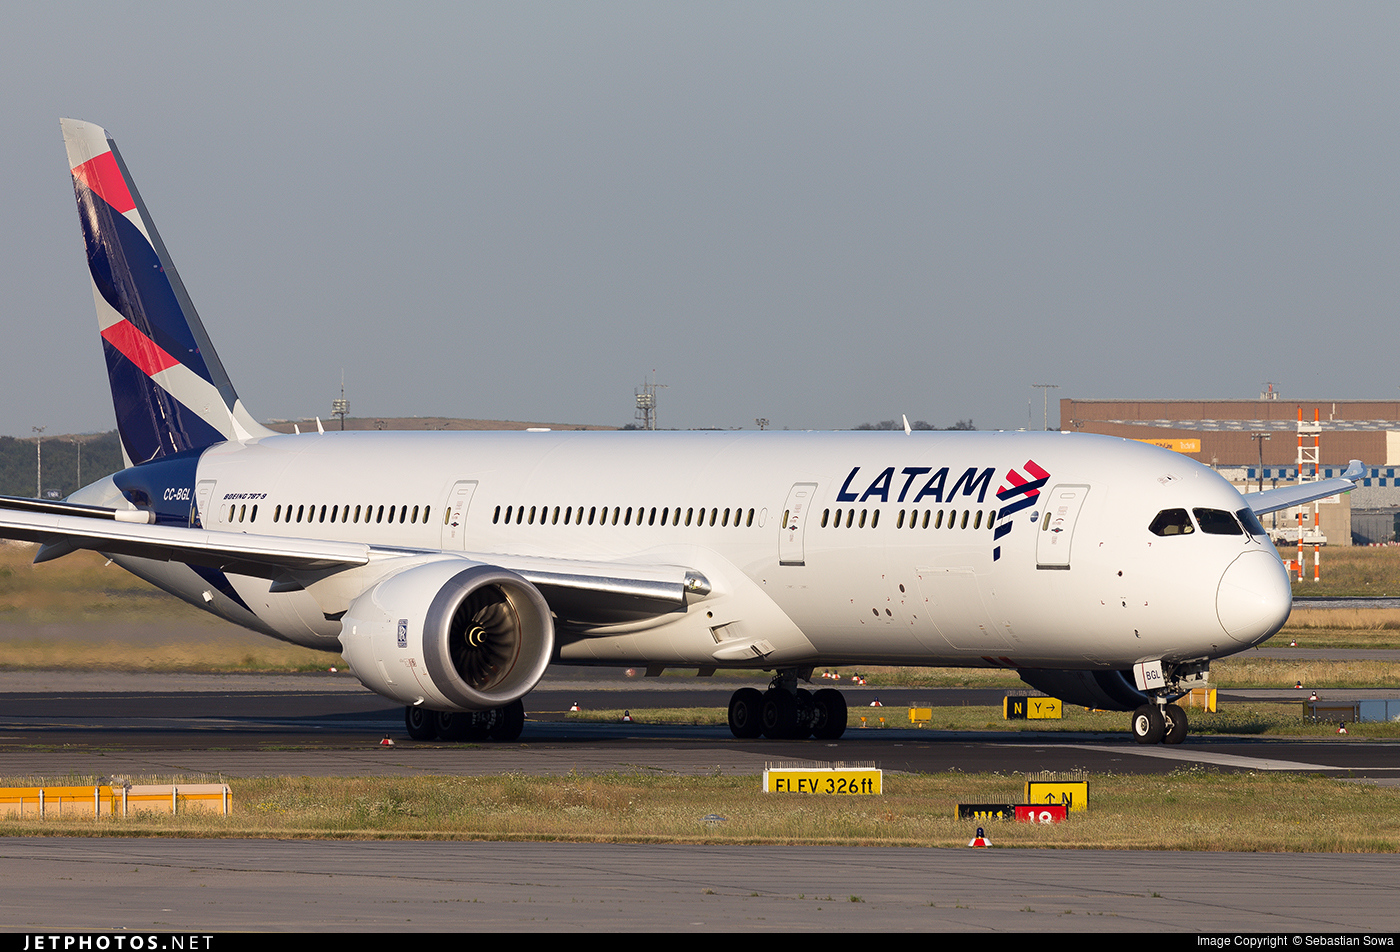 LATAM incrementará sus vuelos entre Sao Paulo y Madrid - Forum Aircraft, Airports and Airlines